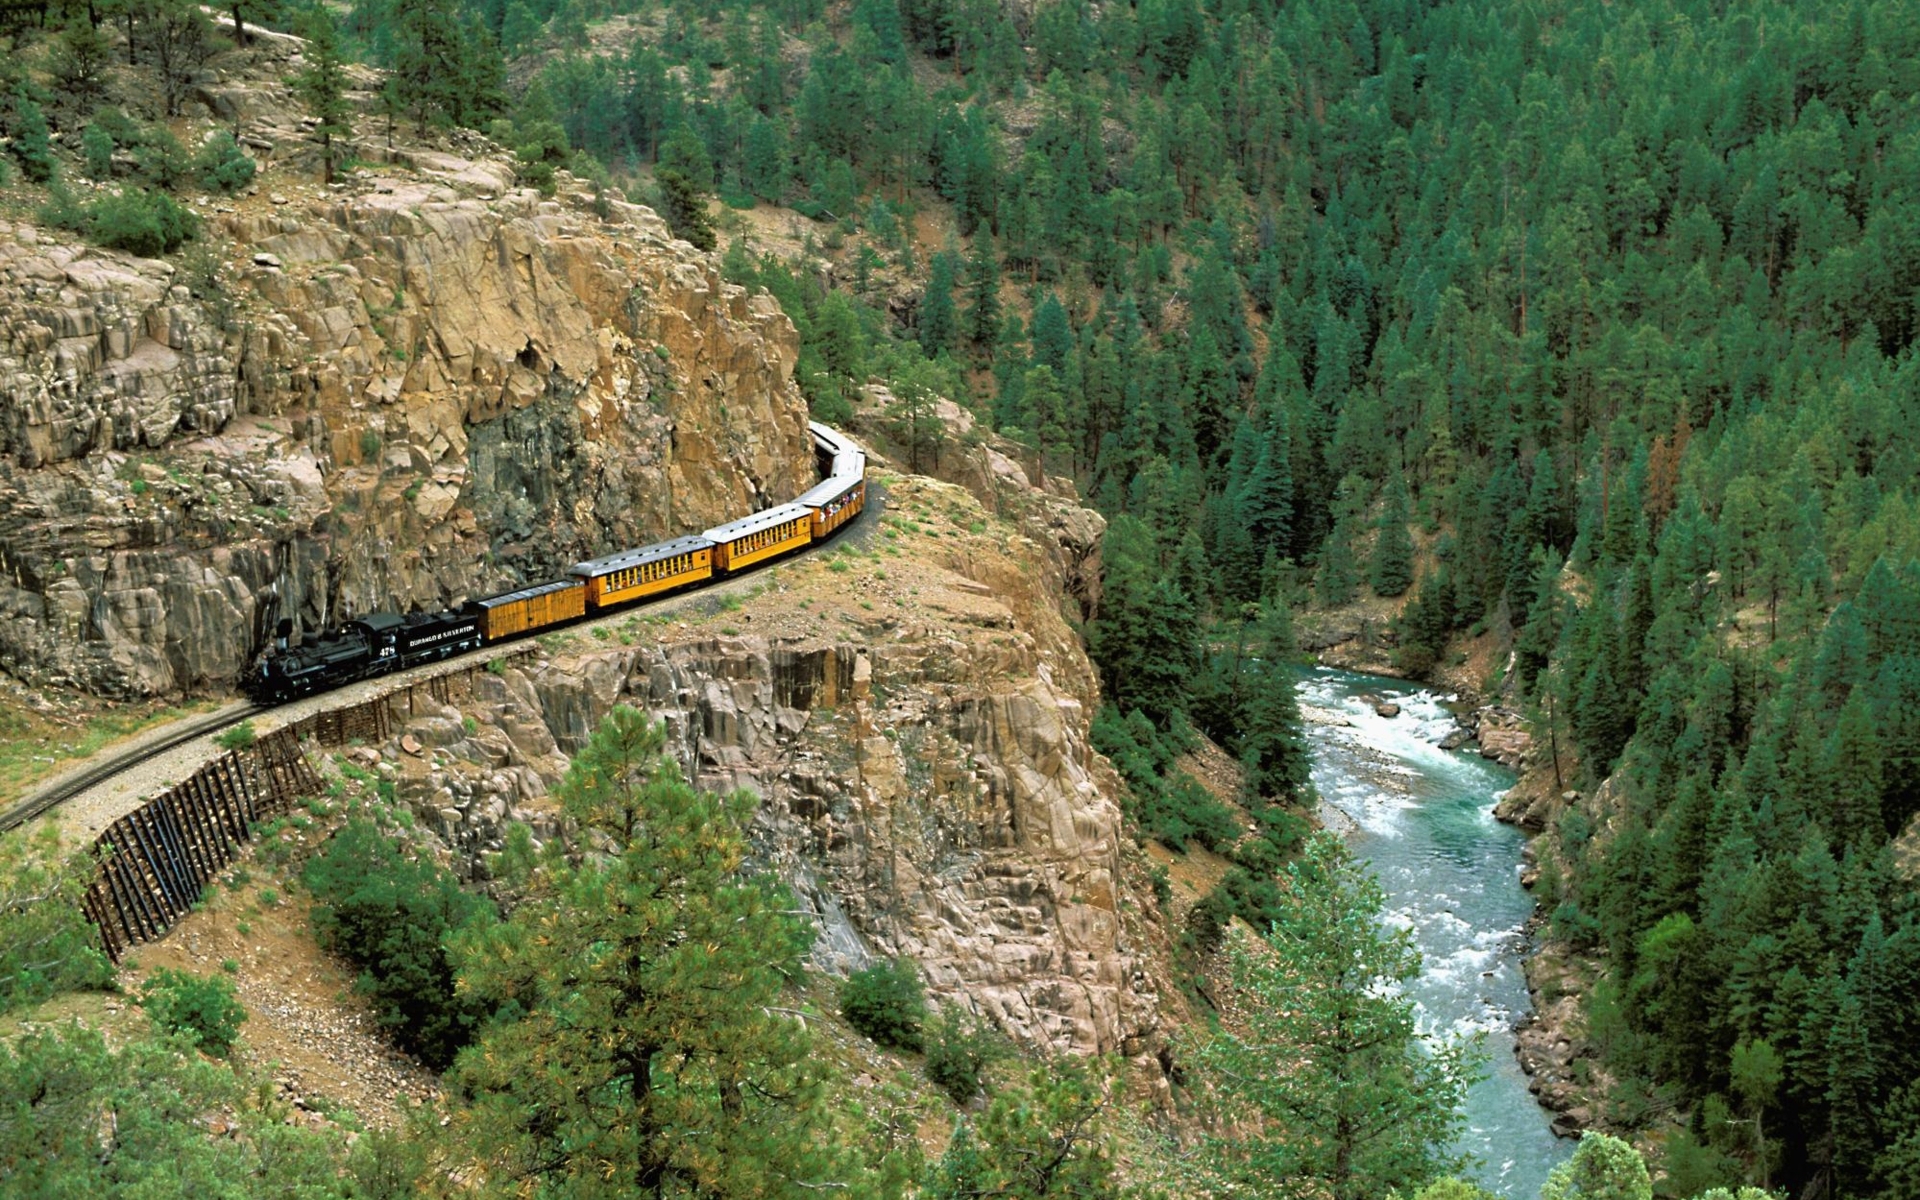 mountains, forests, railroad tracks, steam engine - desktop wallpaper